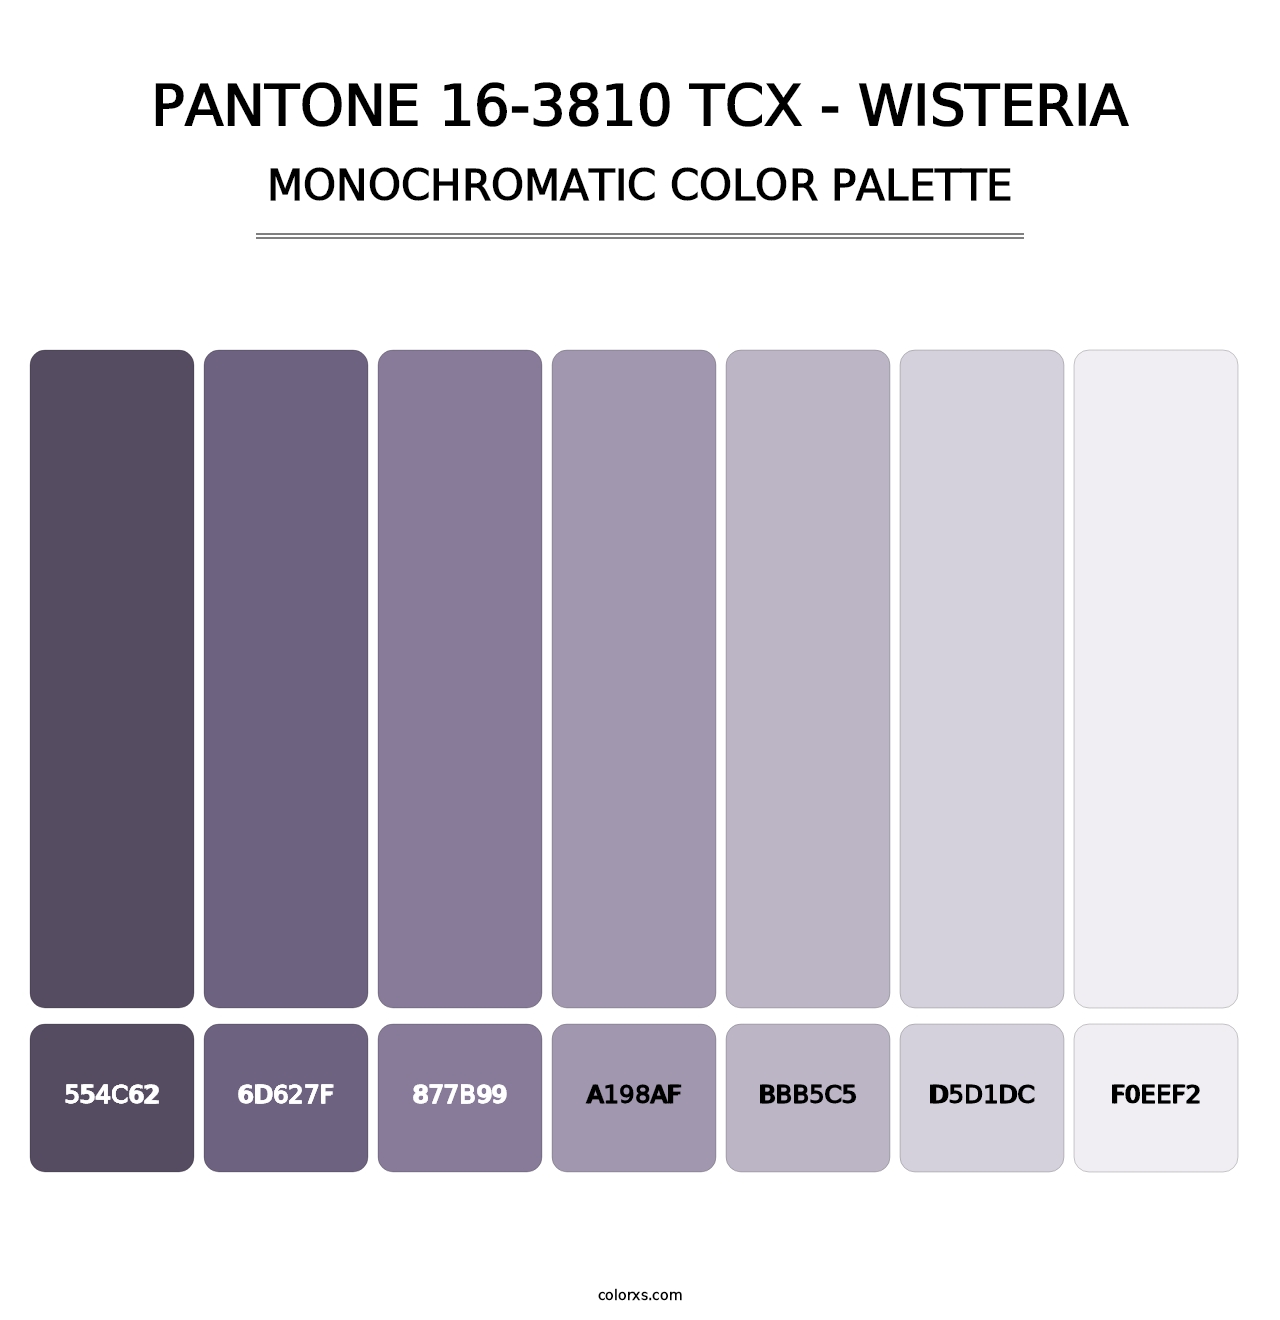 PANTONE 16-3810 TCX - Wisteria - Monochromatic Color Palette